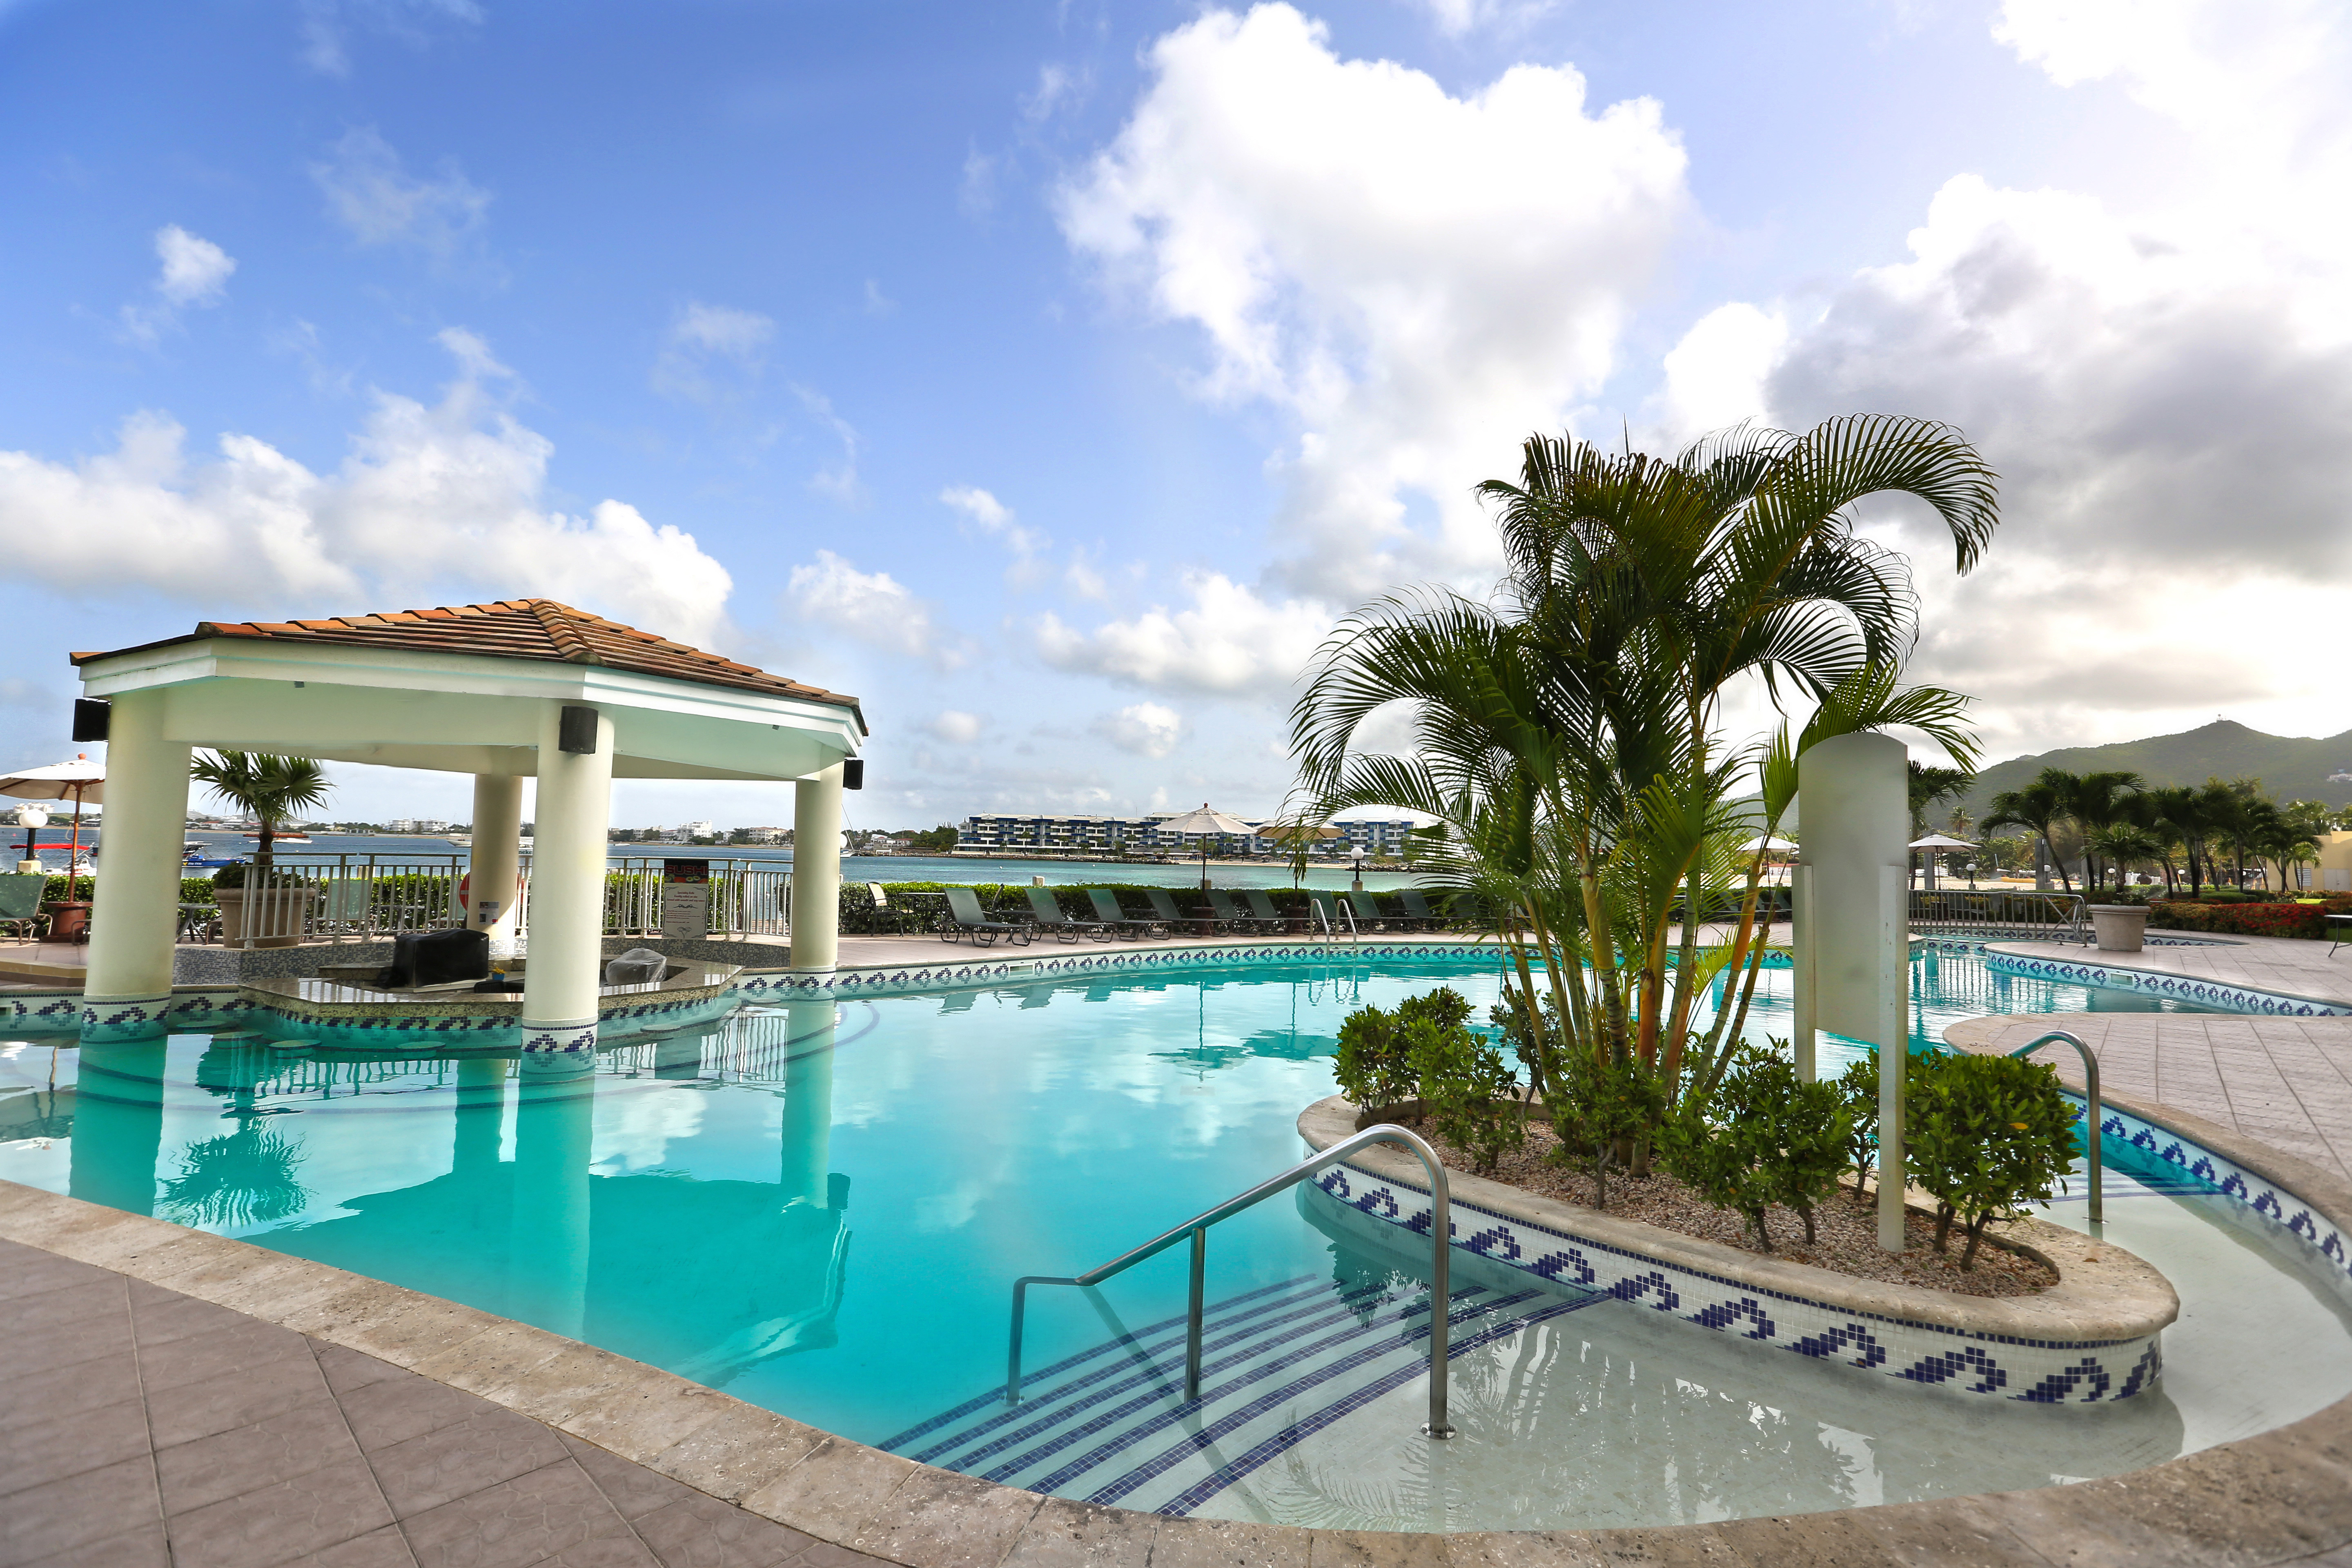 The Villas at Simpson Bay Resort & Marina